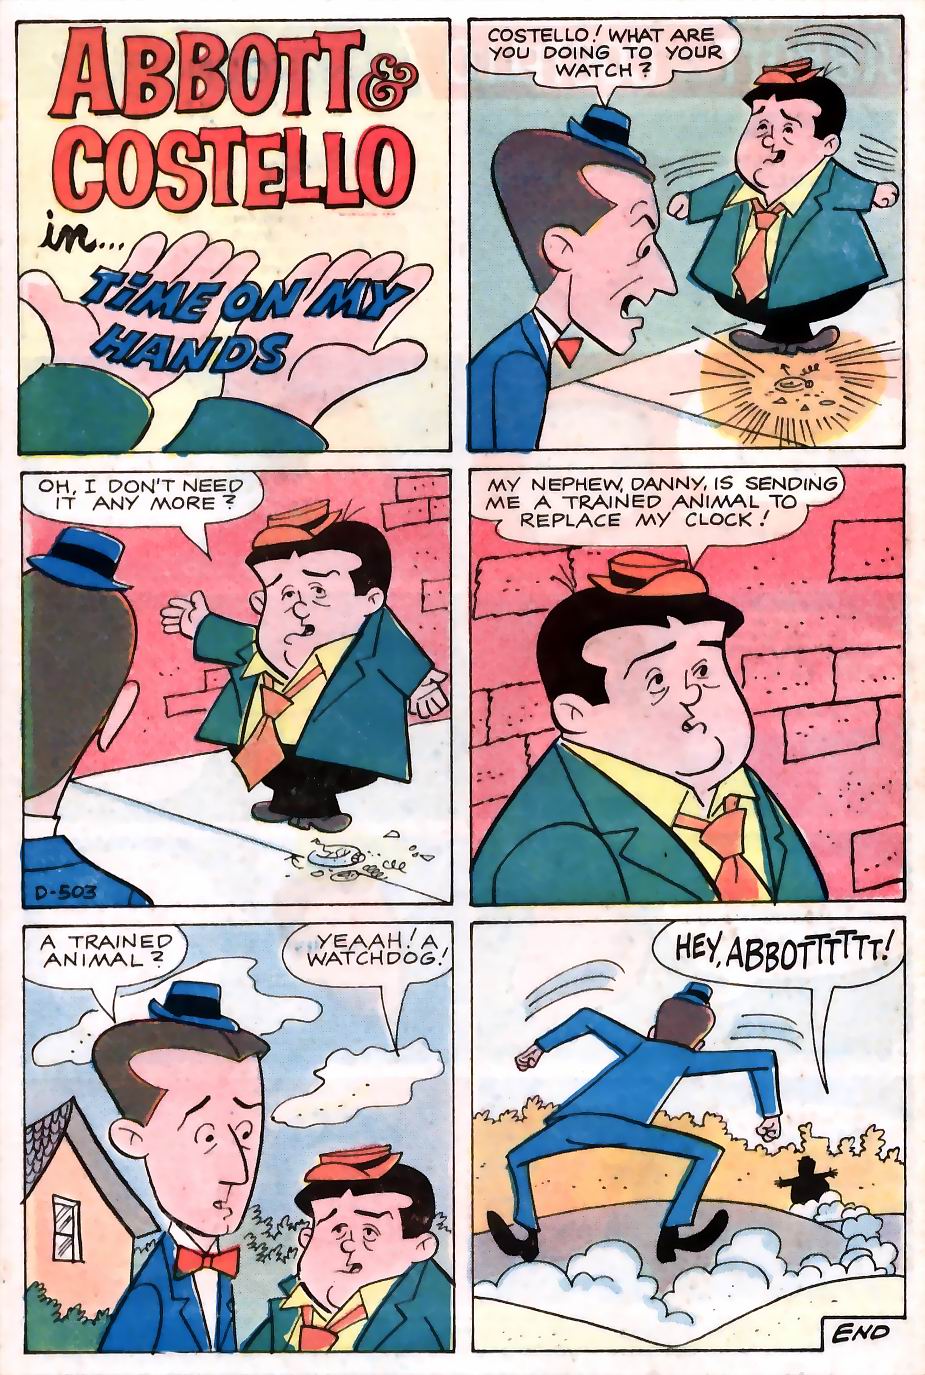 Read online Abbott & Costello comic -  Issue #17 - 12